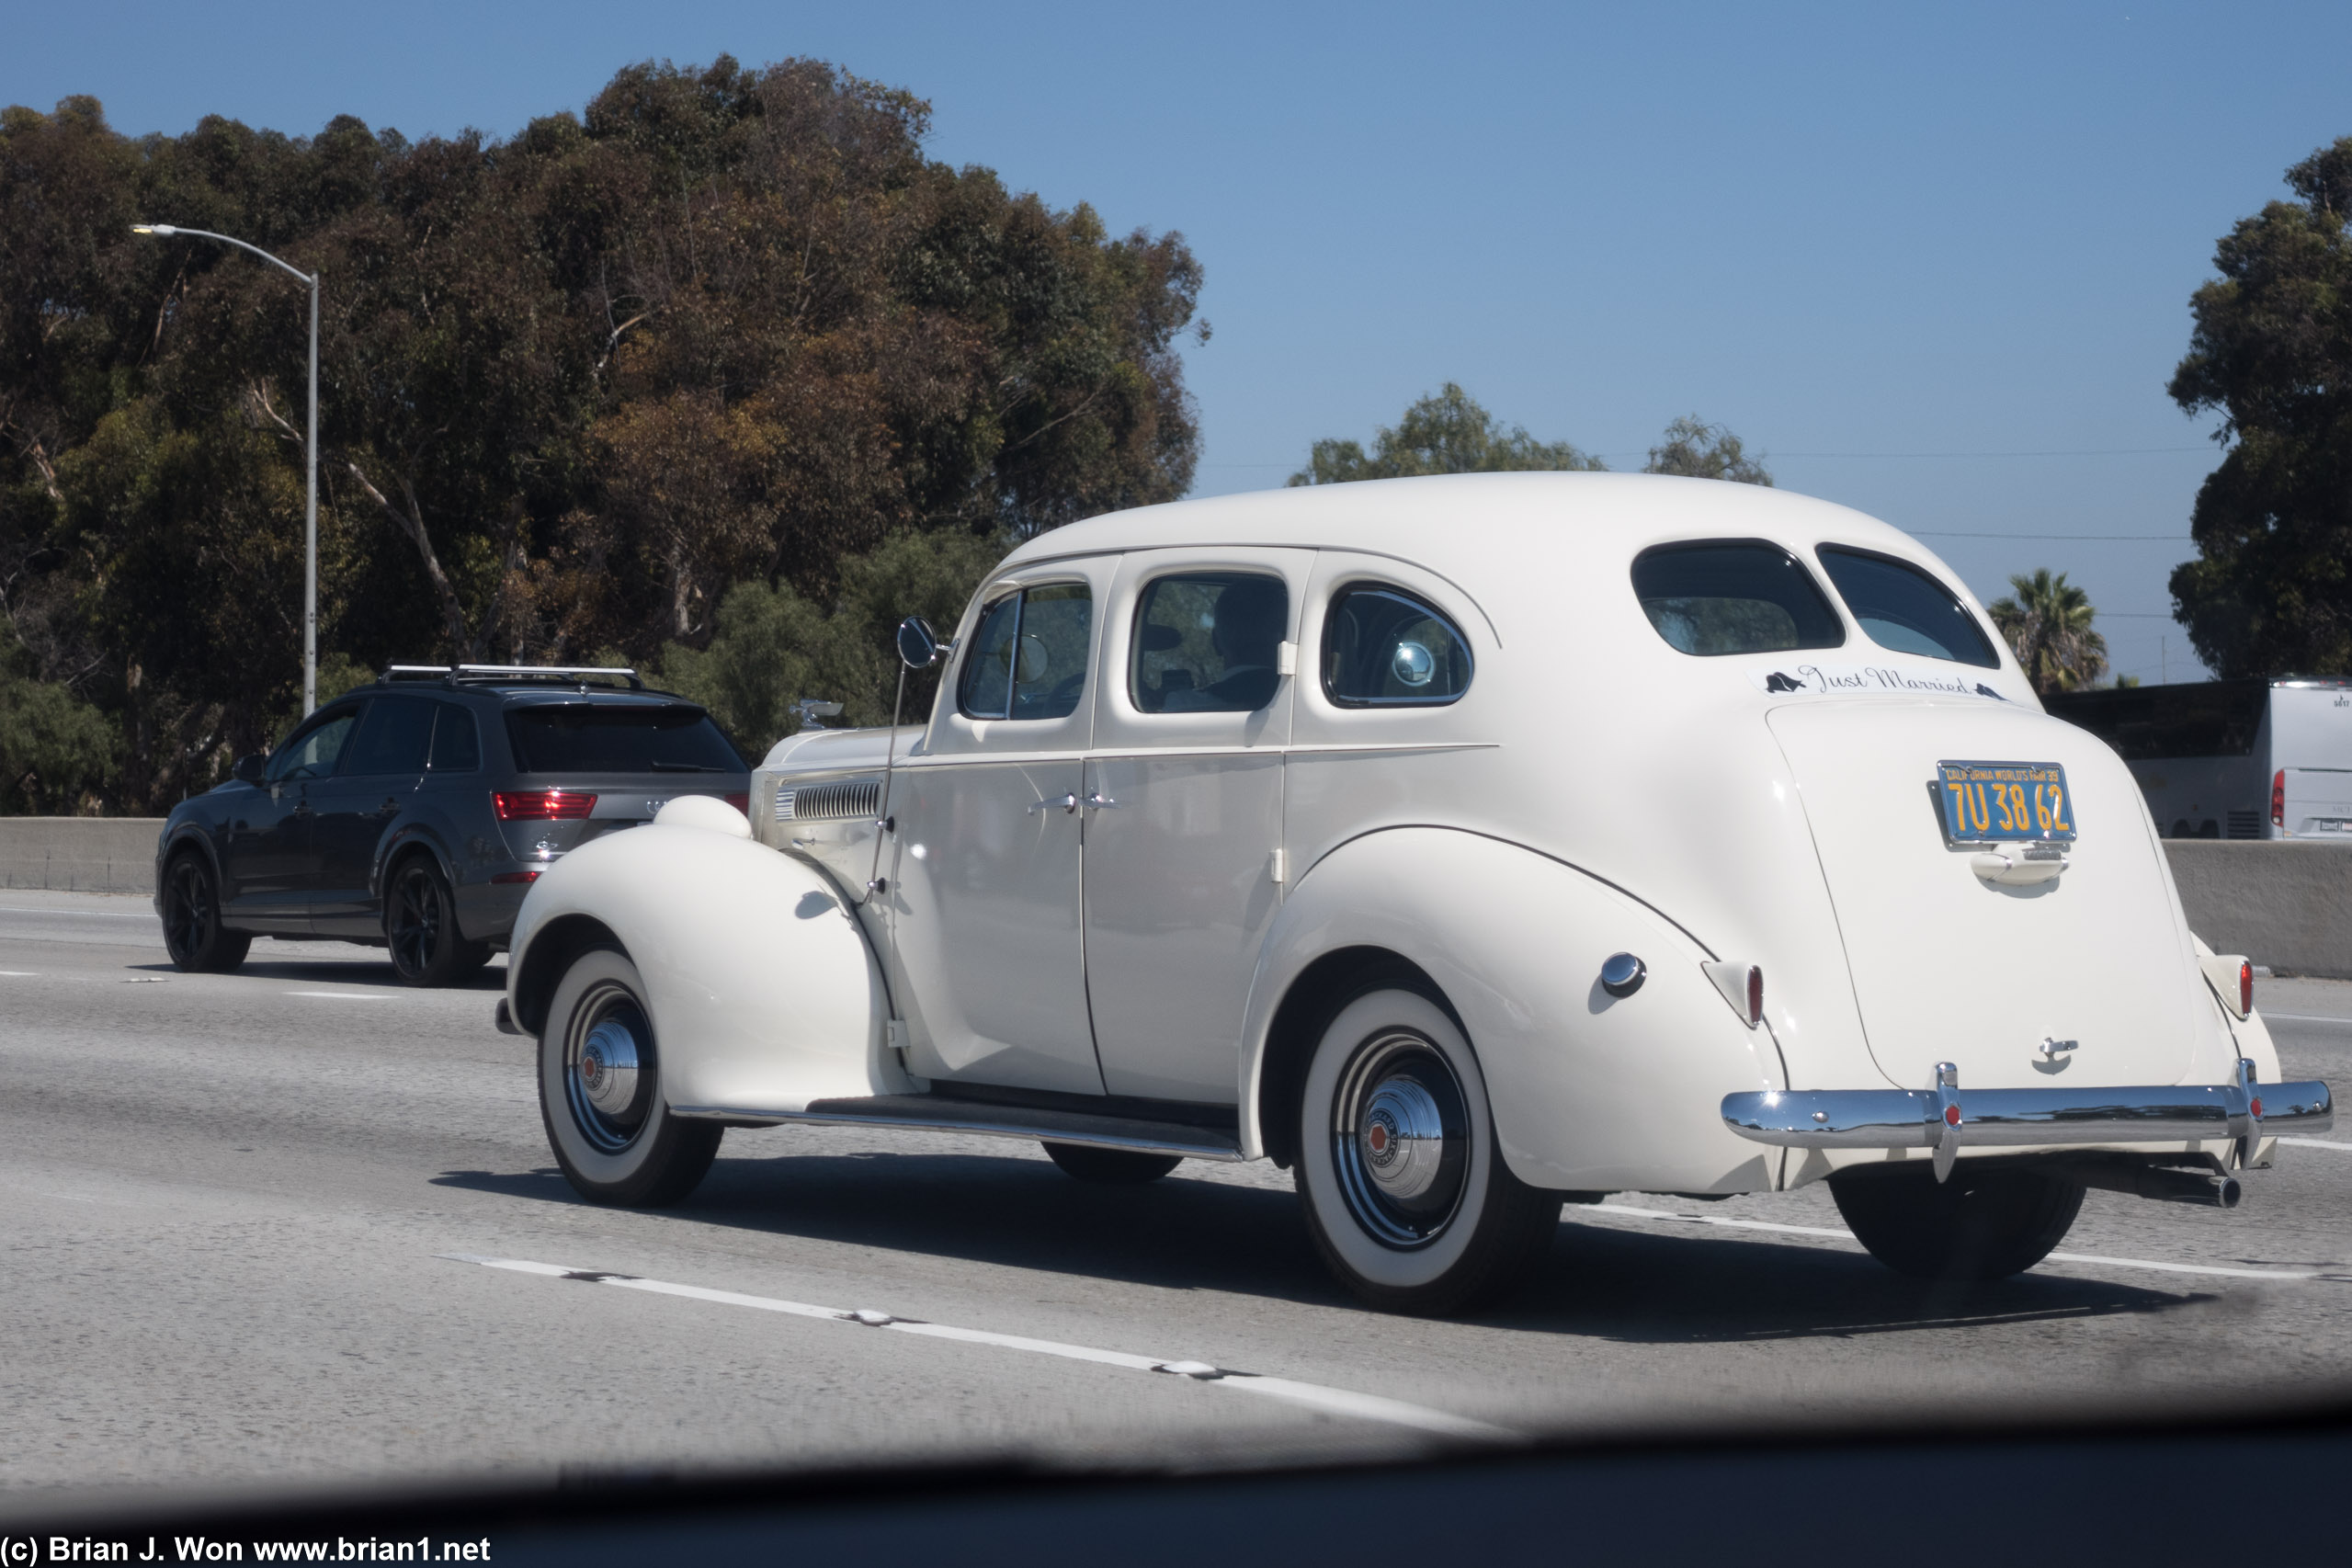 Possibly a 1937 Ford Humpback sedan?